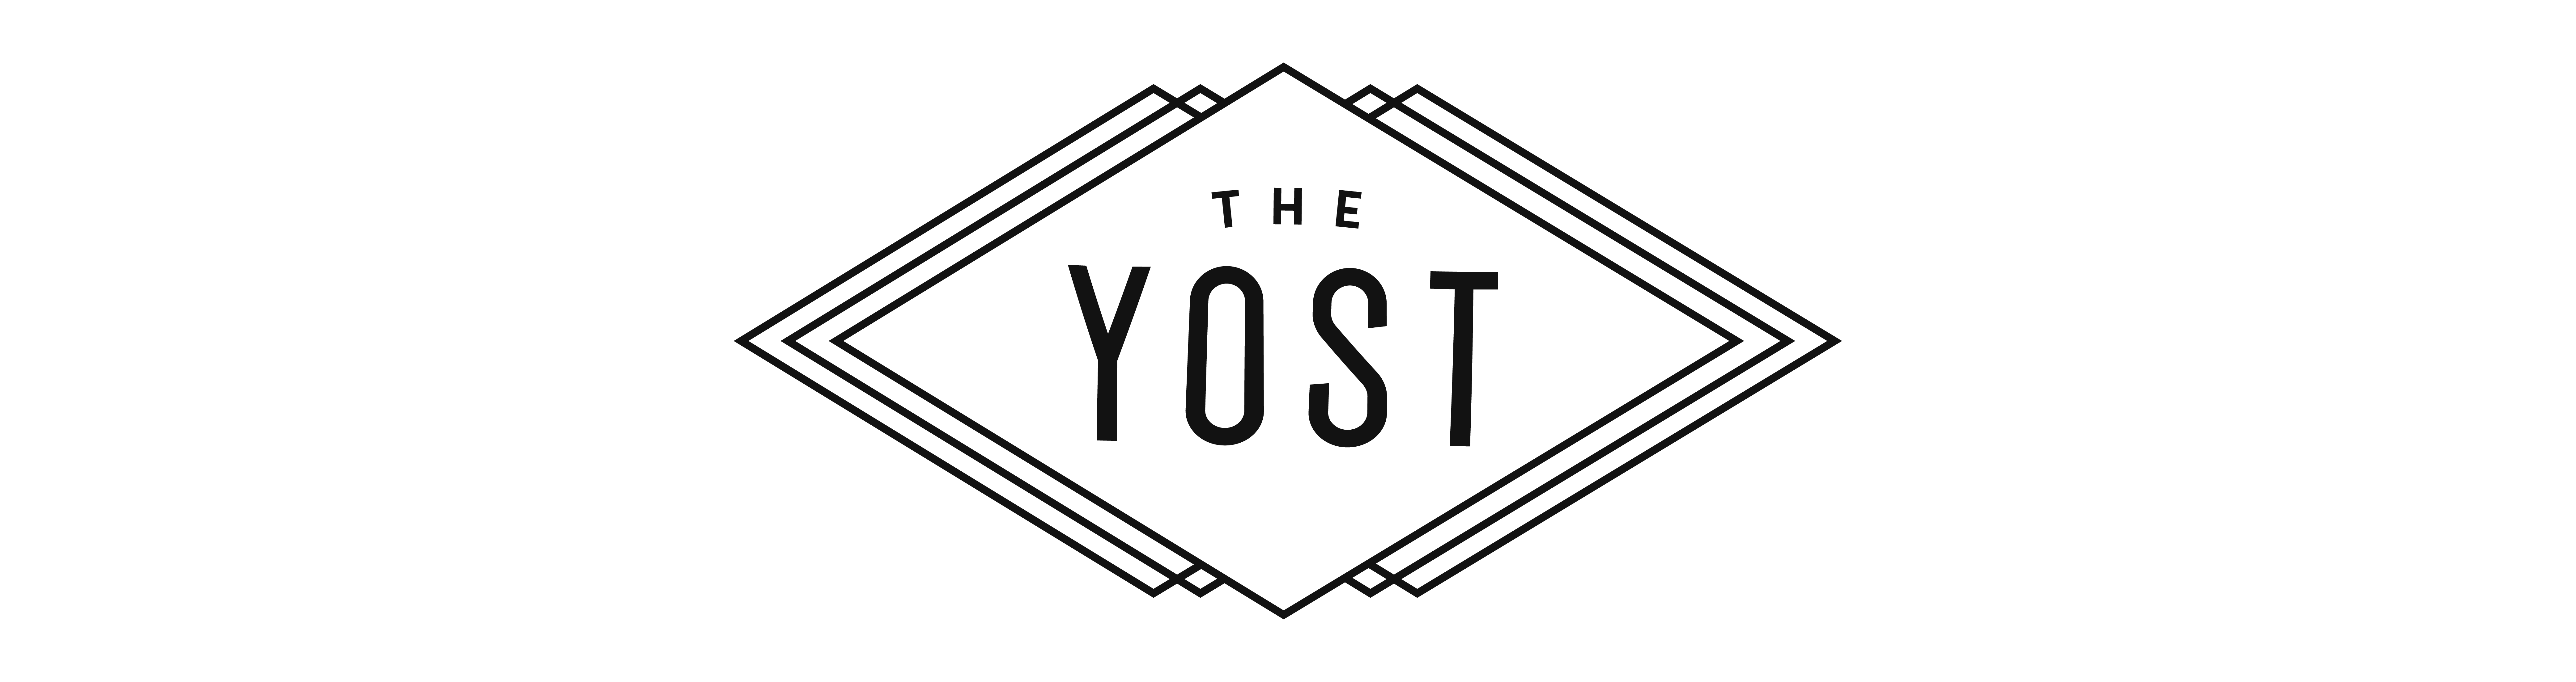 Yost venue logo and brand by Album